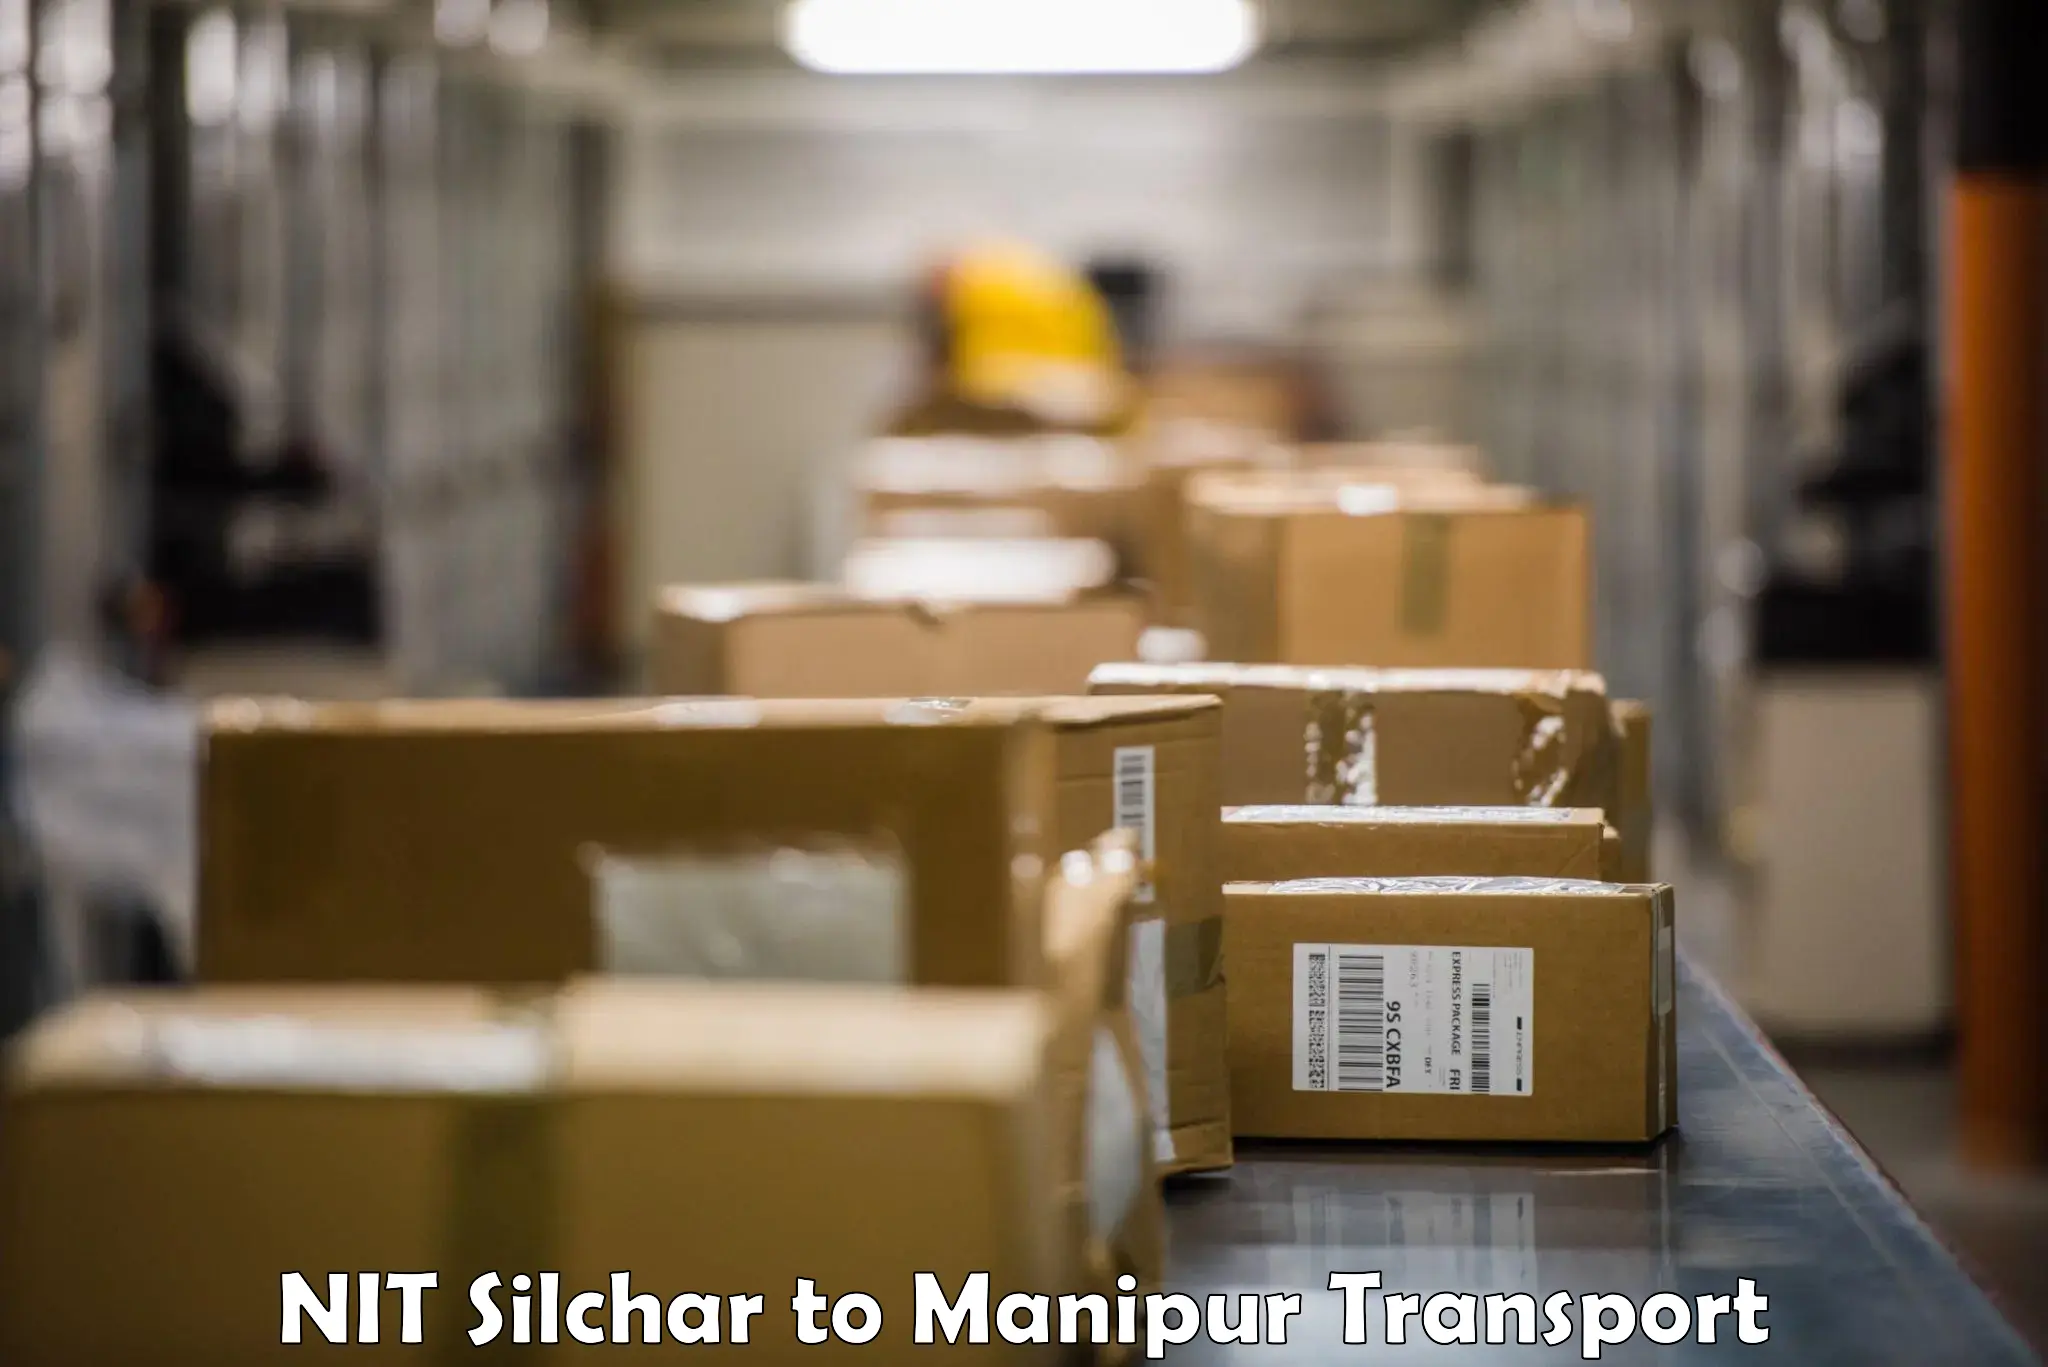 Online transport service NIT Silchar to Manipur